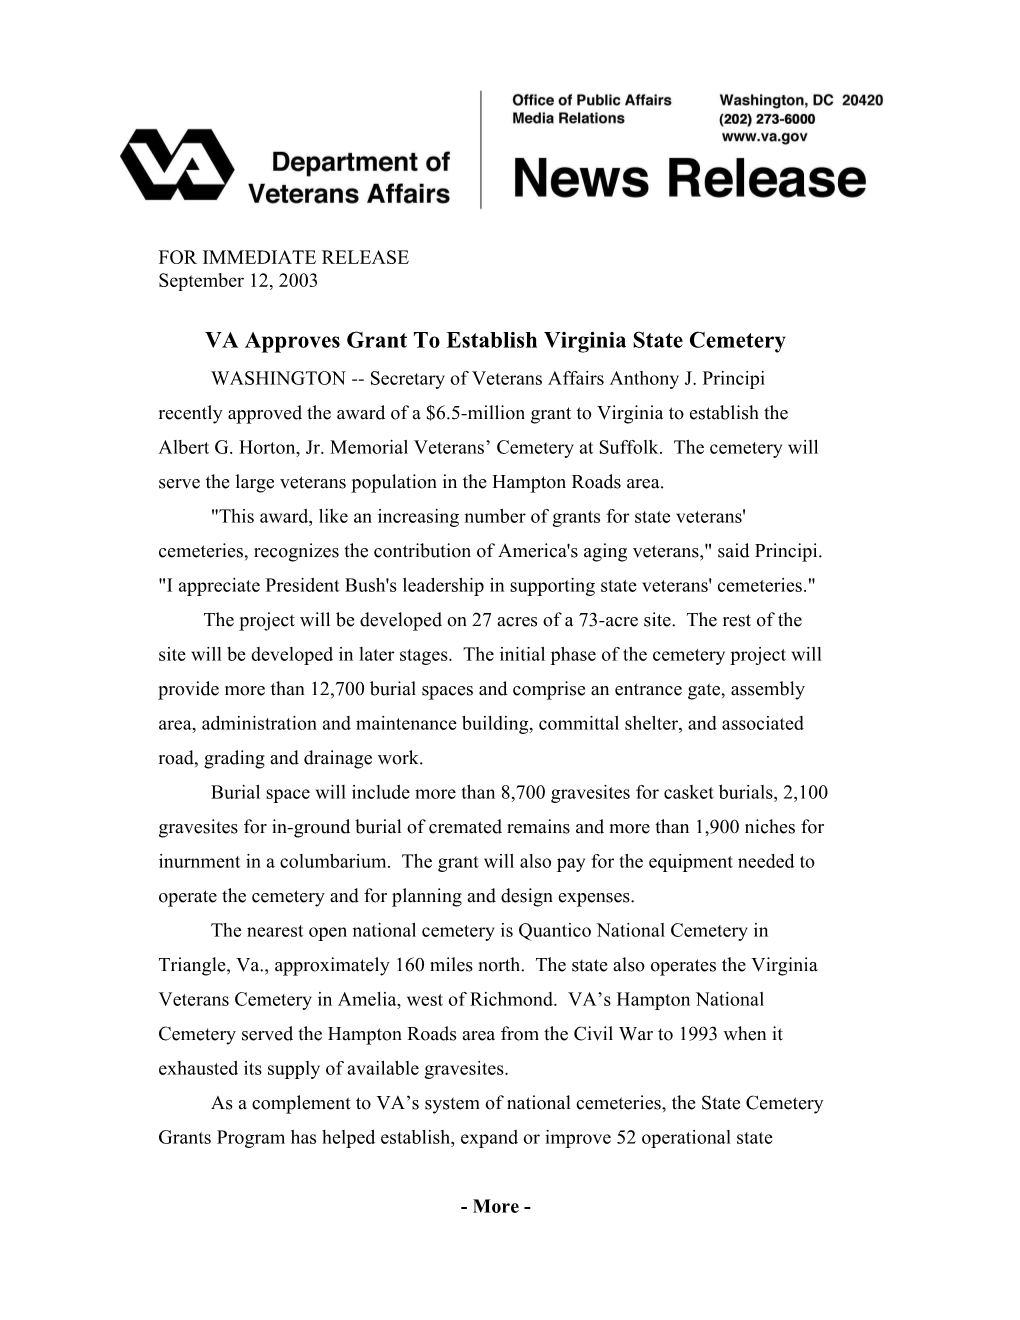 VA Approves Grant to Establish Virginia State Cemetery